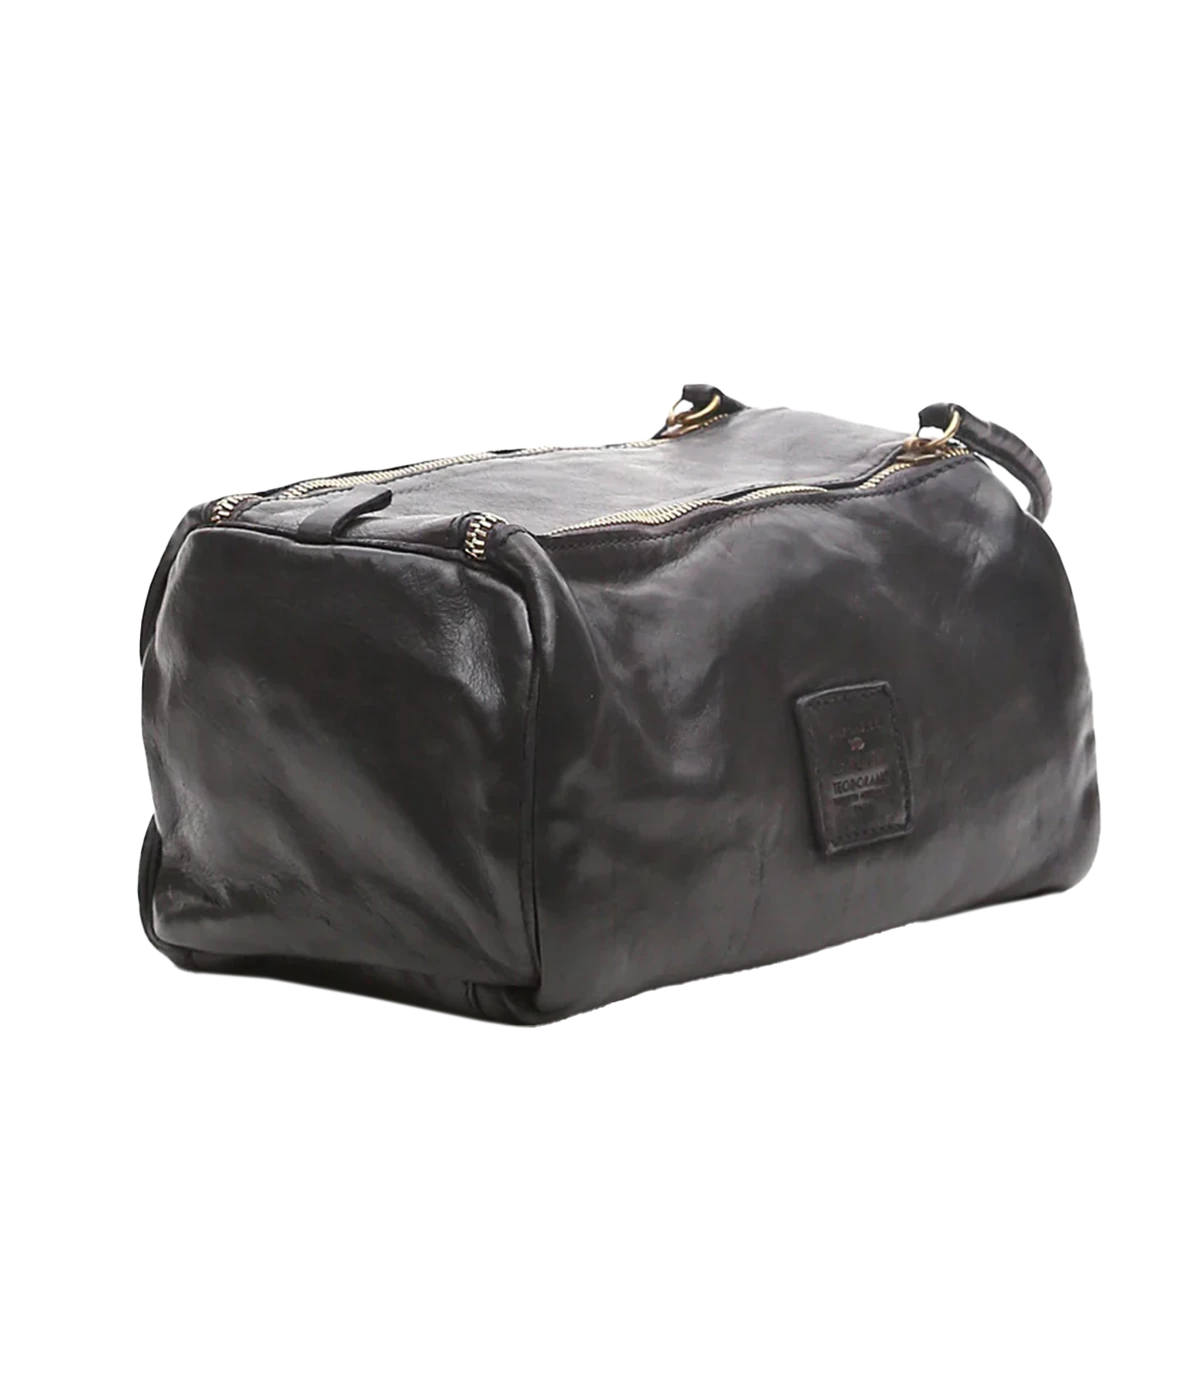 Leather Toiletries Bag in Black